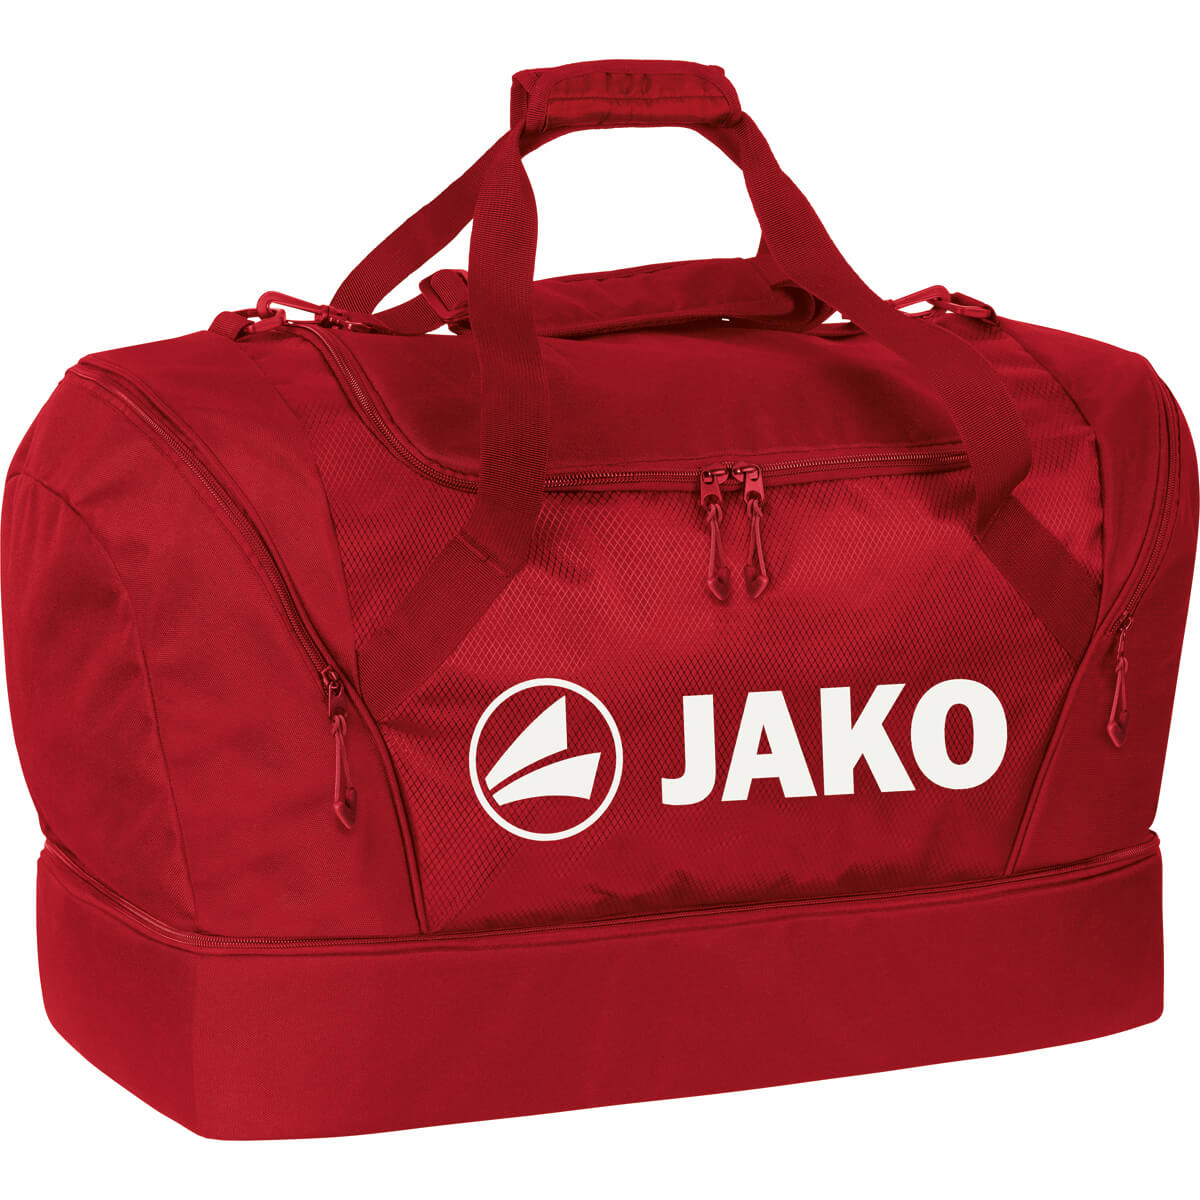 JAKO 2089-11 Sport Bag Chili Red